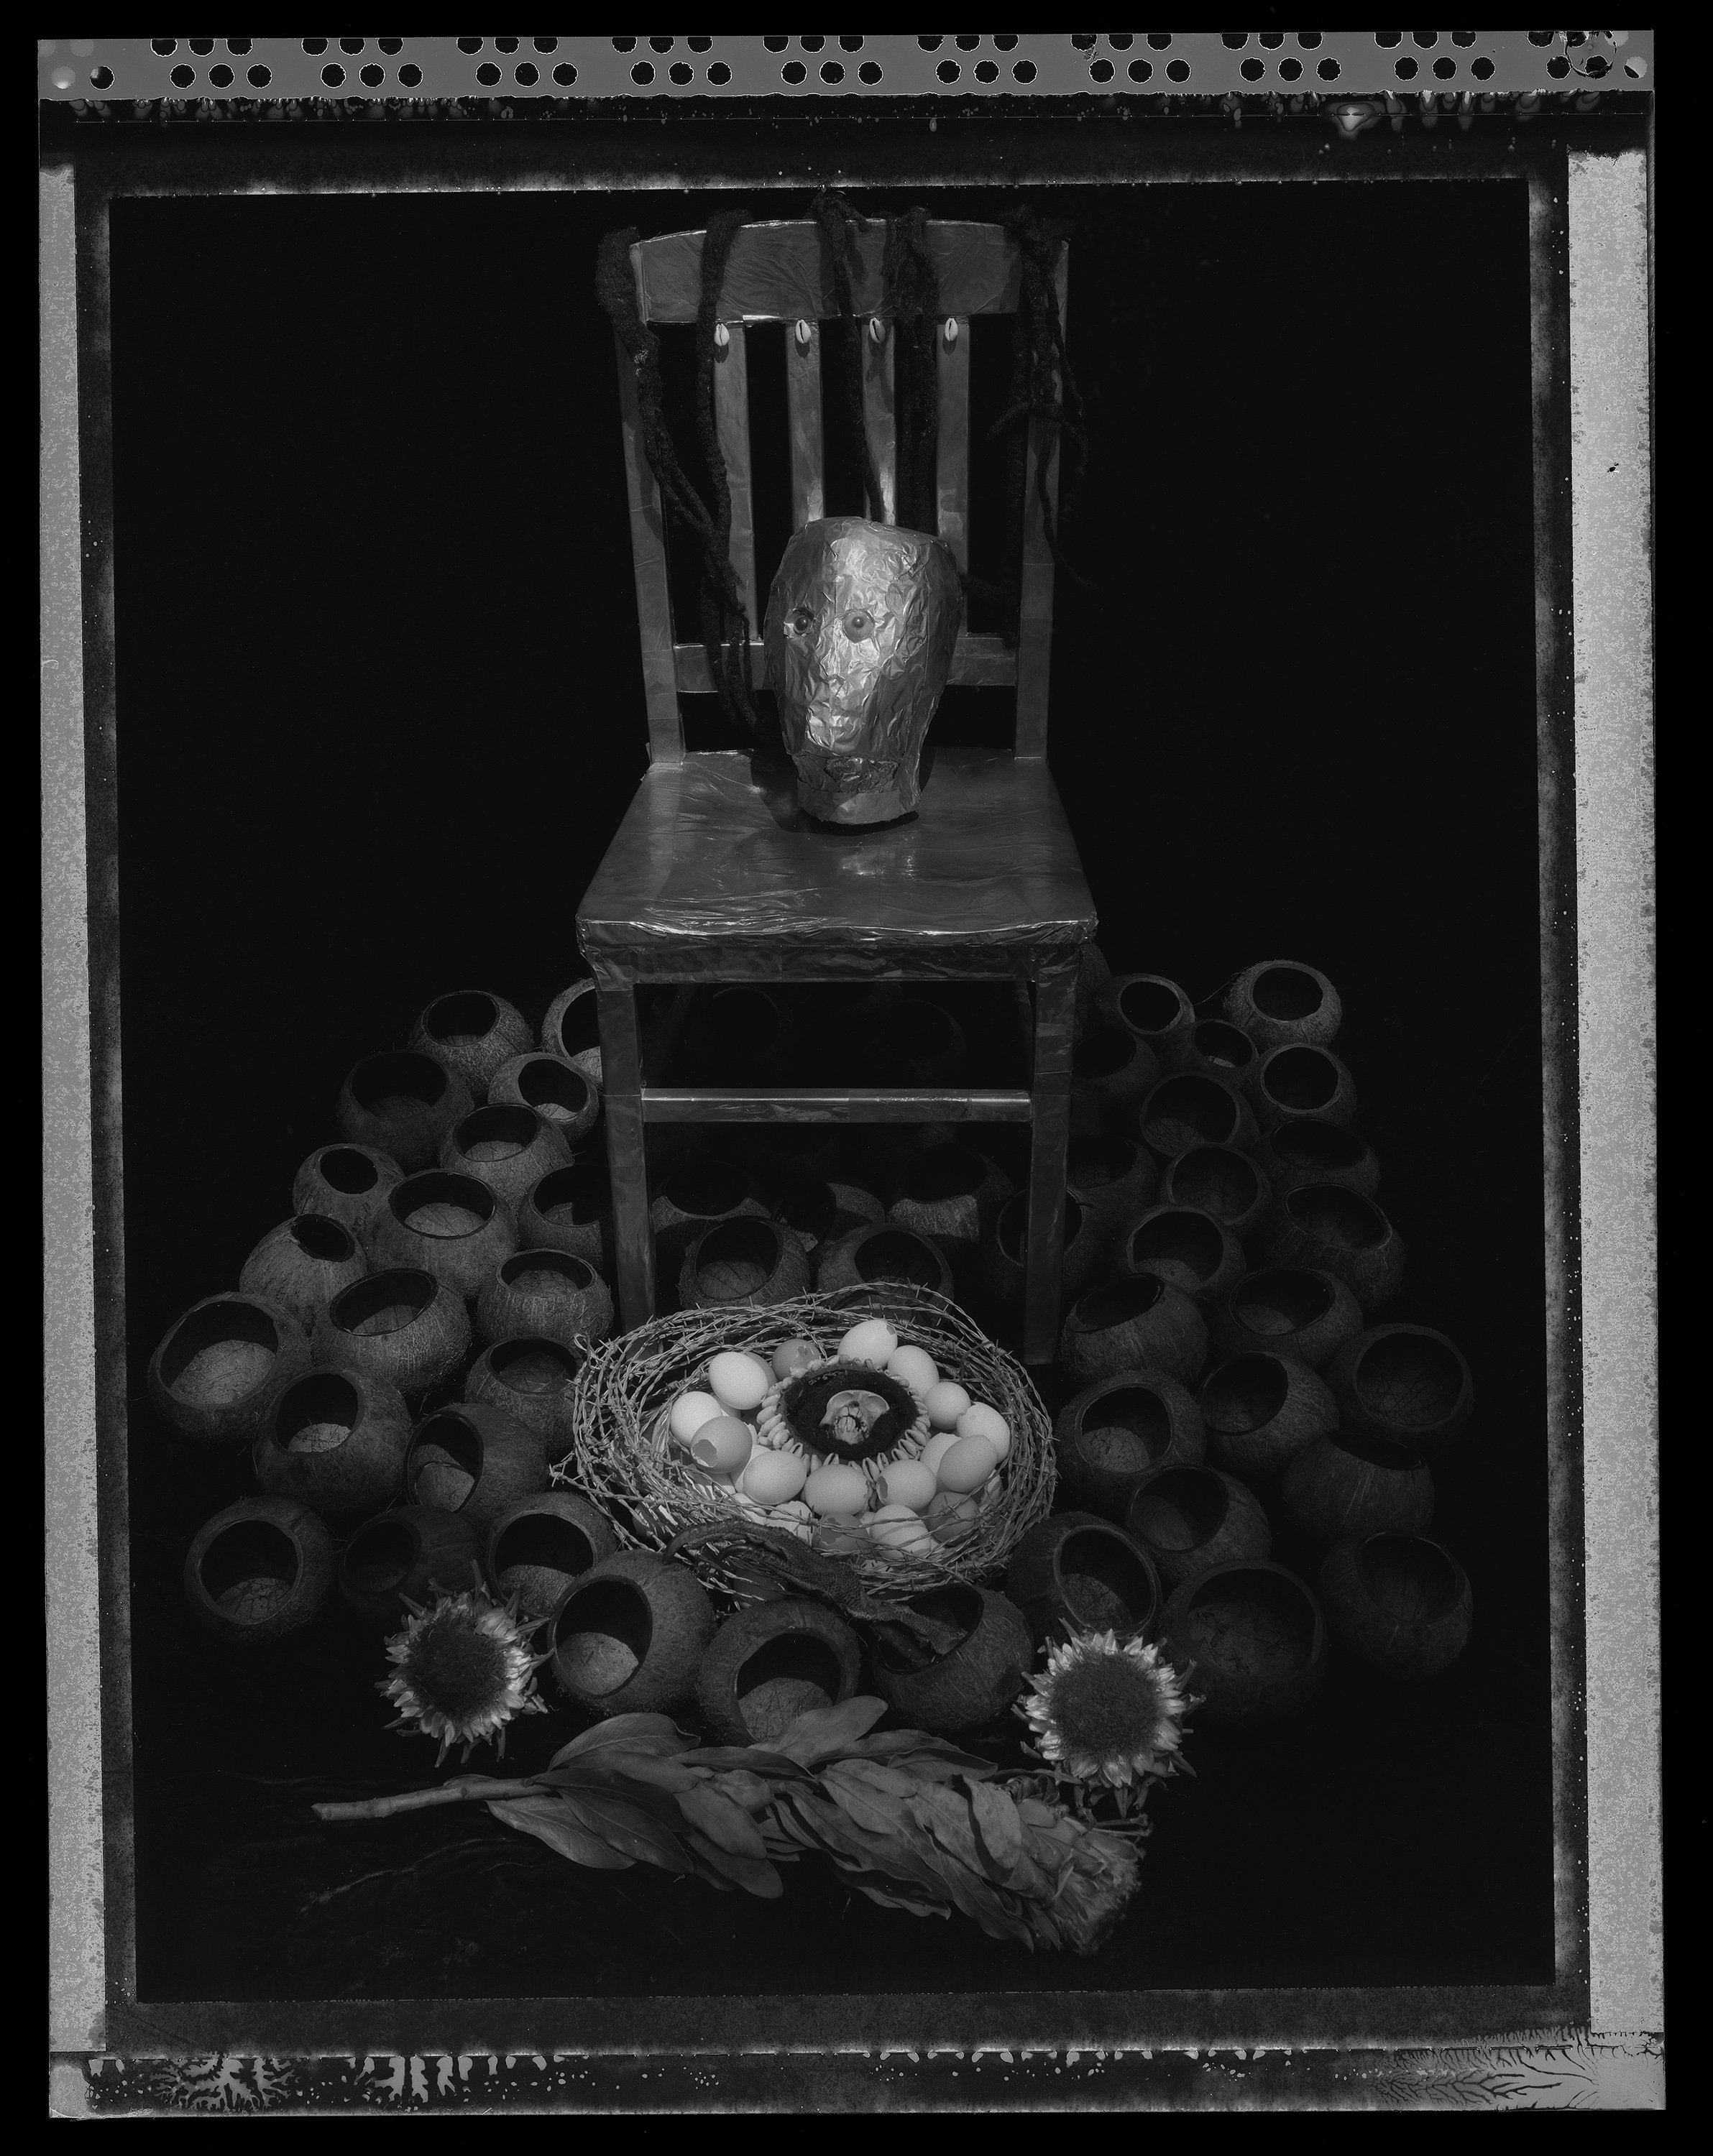 Copper Throne with Copper Head, 1991